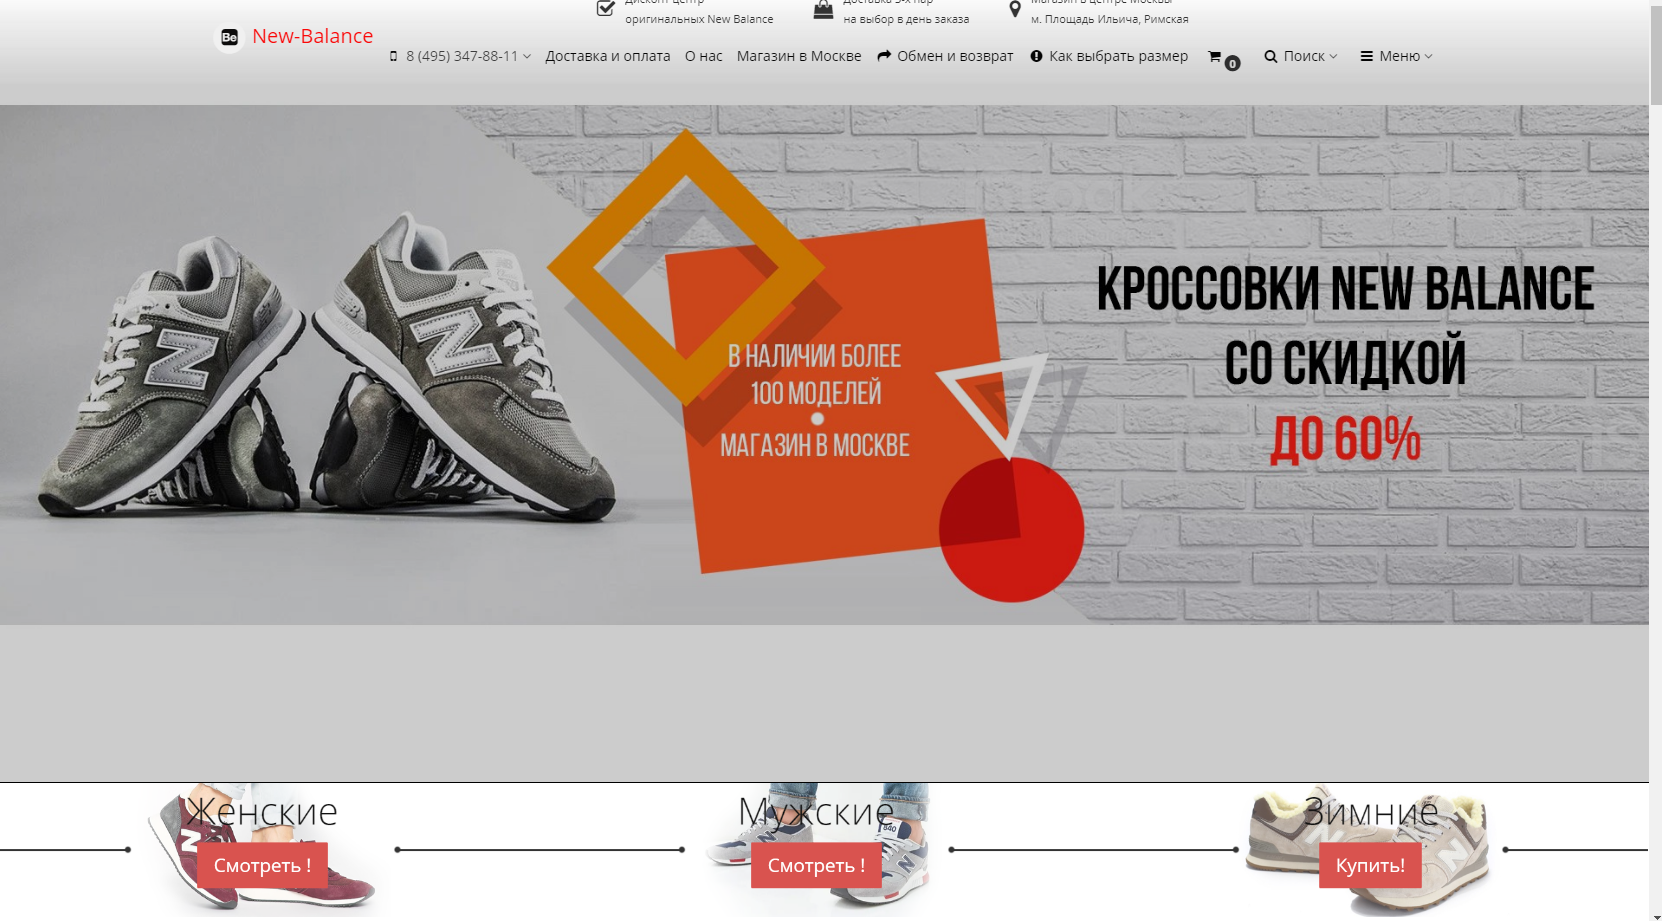 Магазин Обуви На Площадь Ильича